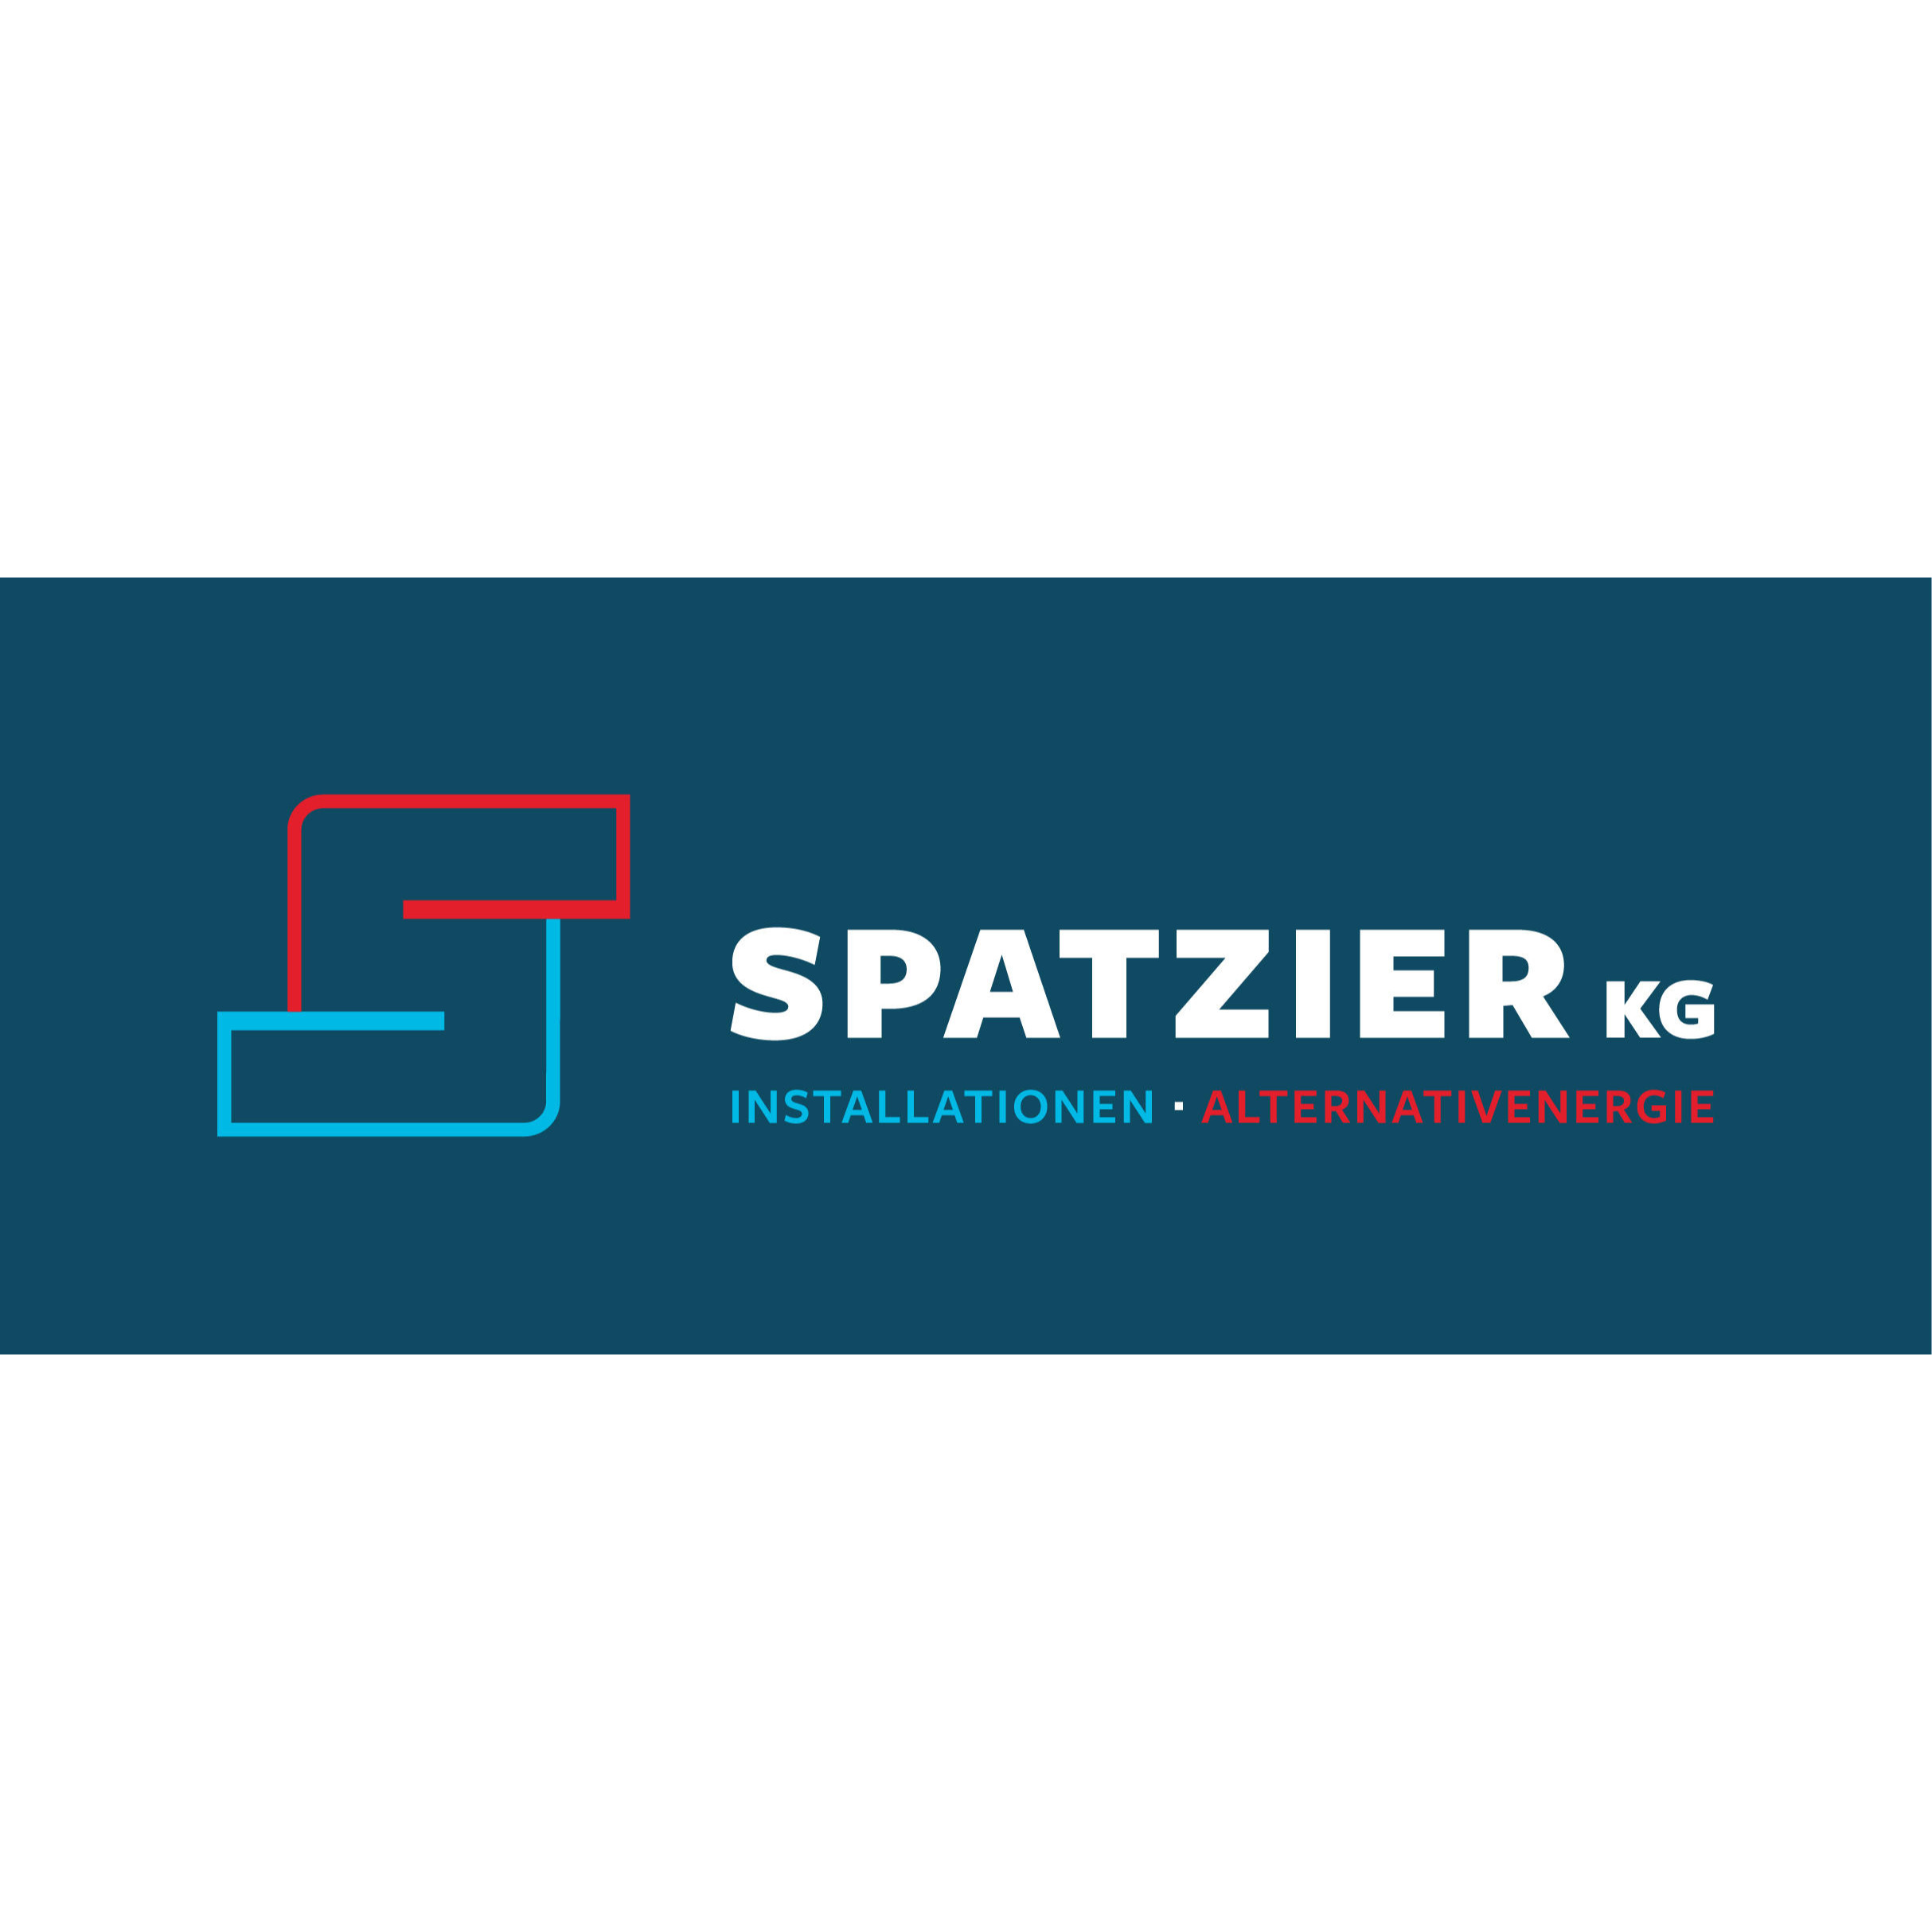 Spatzier KG